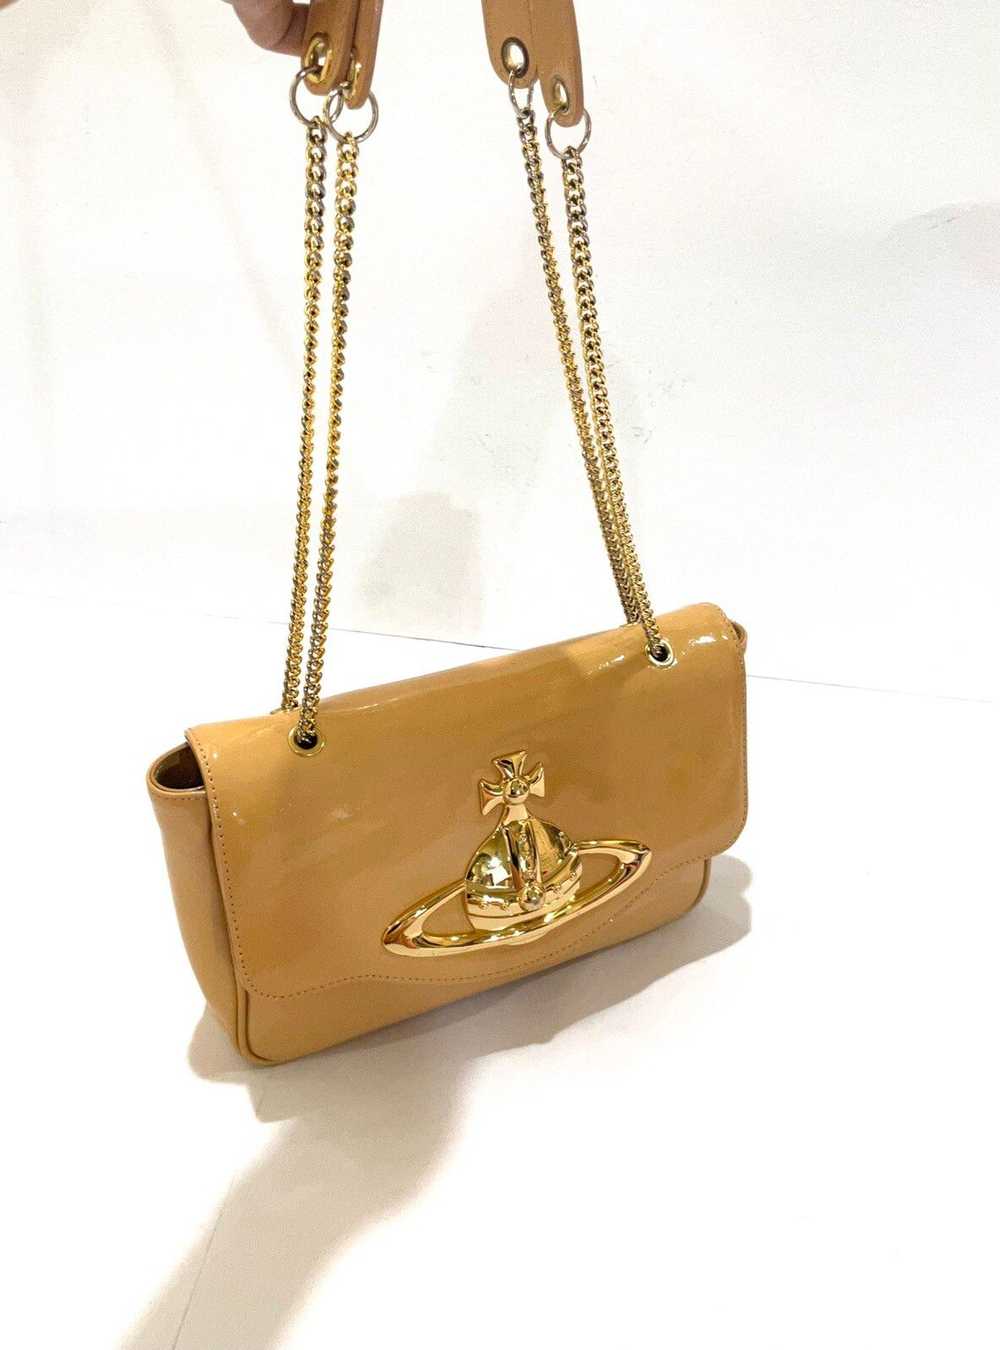 Vivienne Westwood Patent Leather Chain Flap Bag - image 2